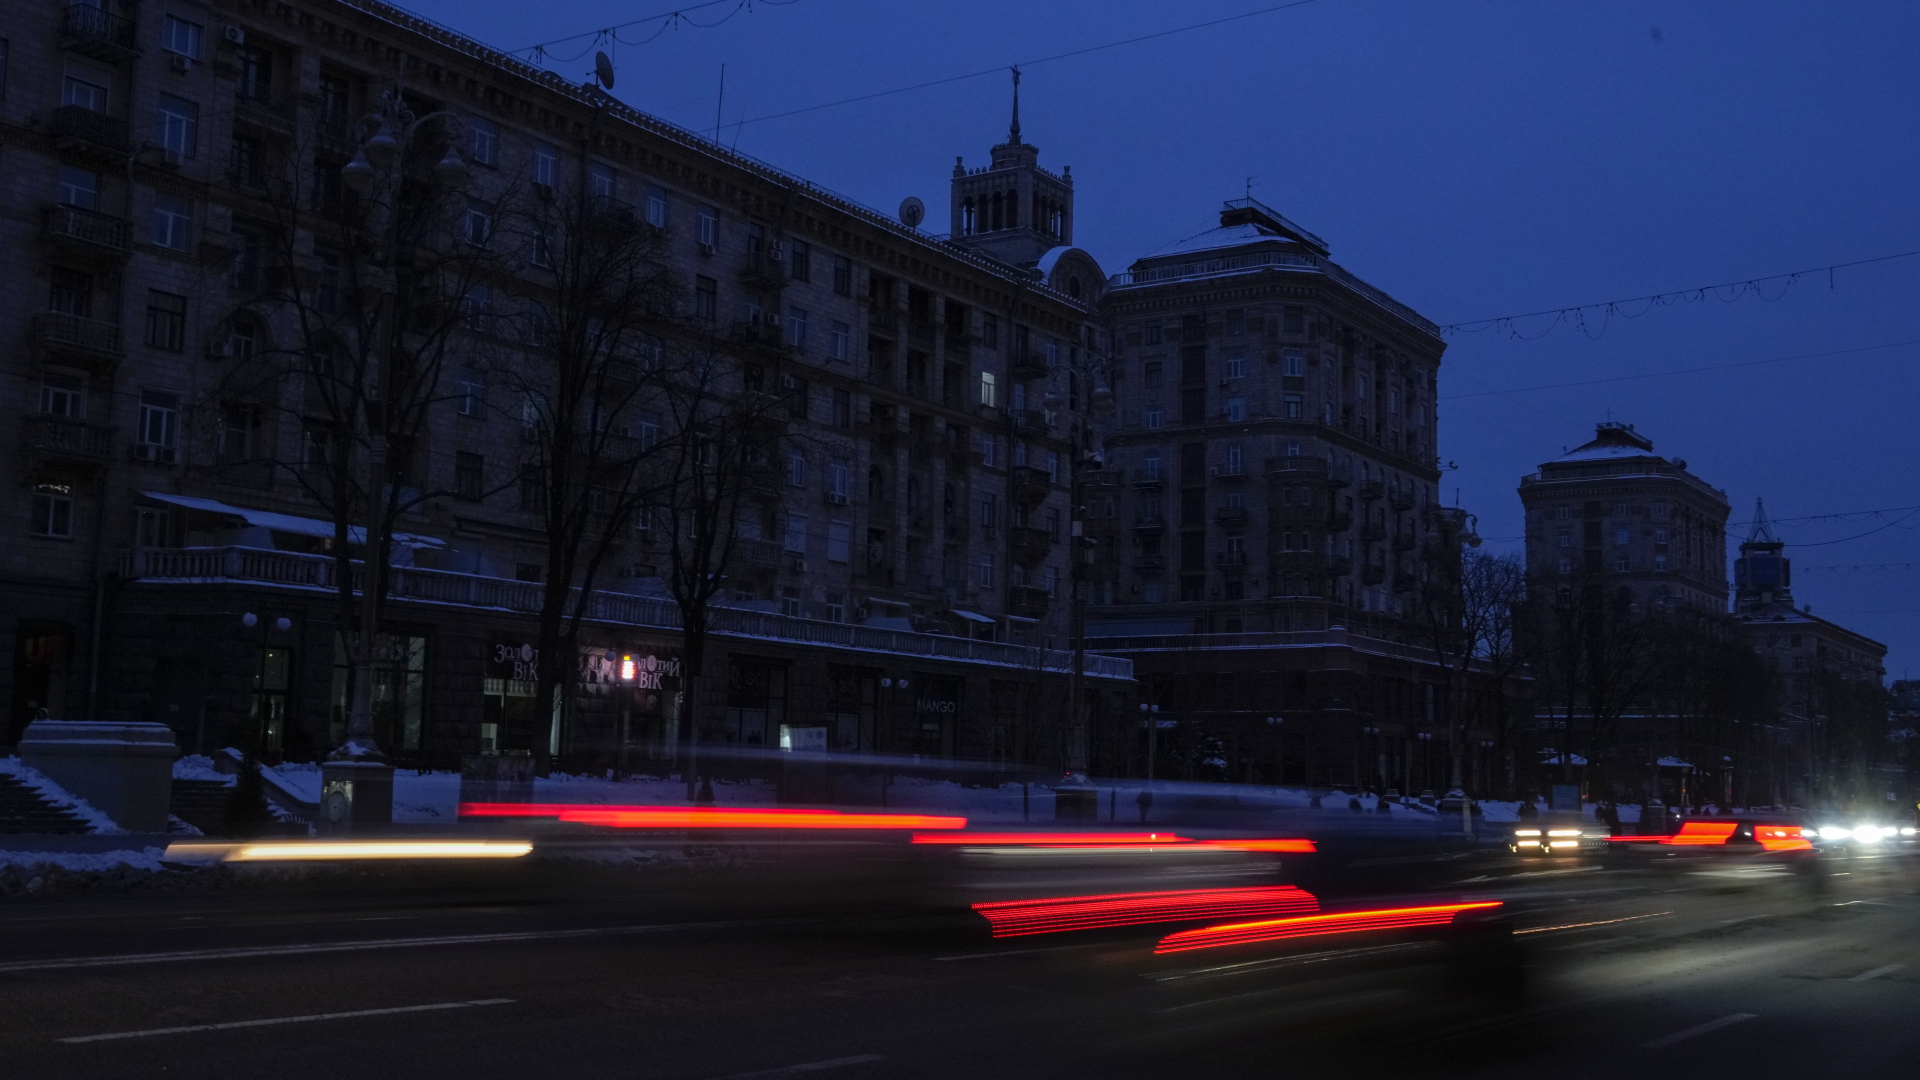 Liveblog: ++ Hälfte der Region Kiew tagelang ohne Strom ++